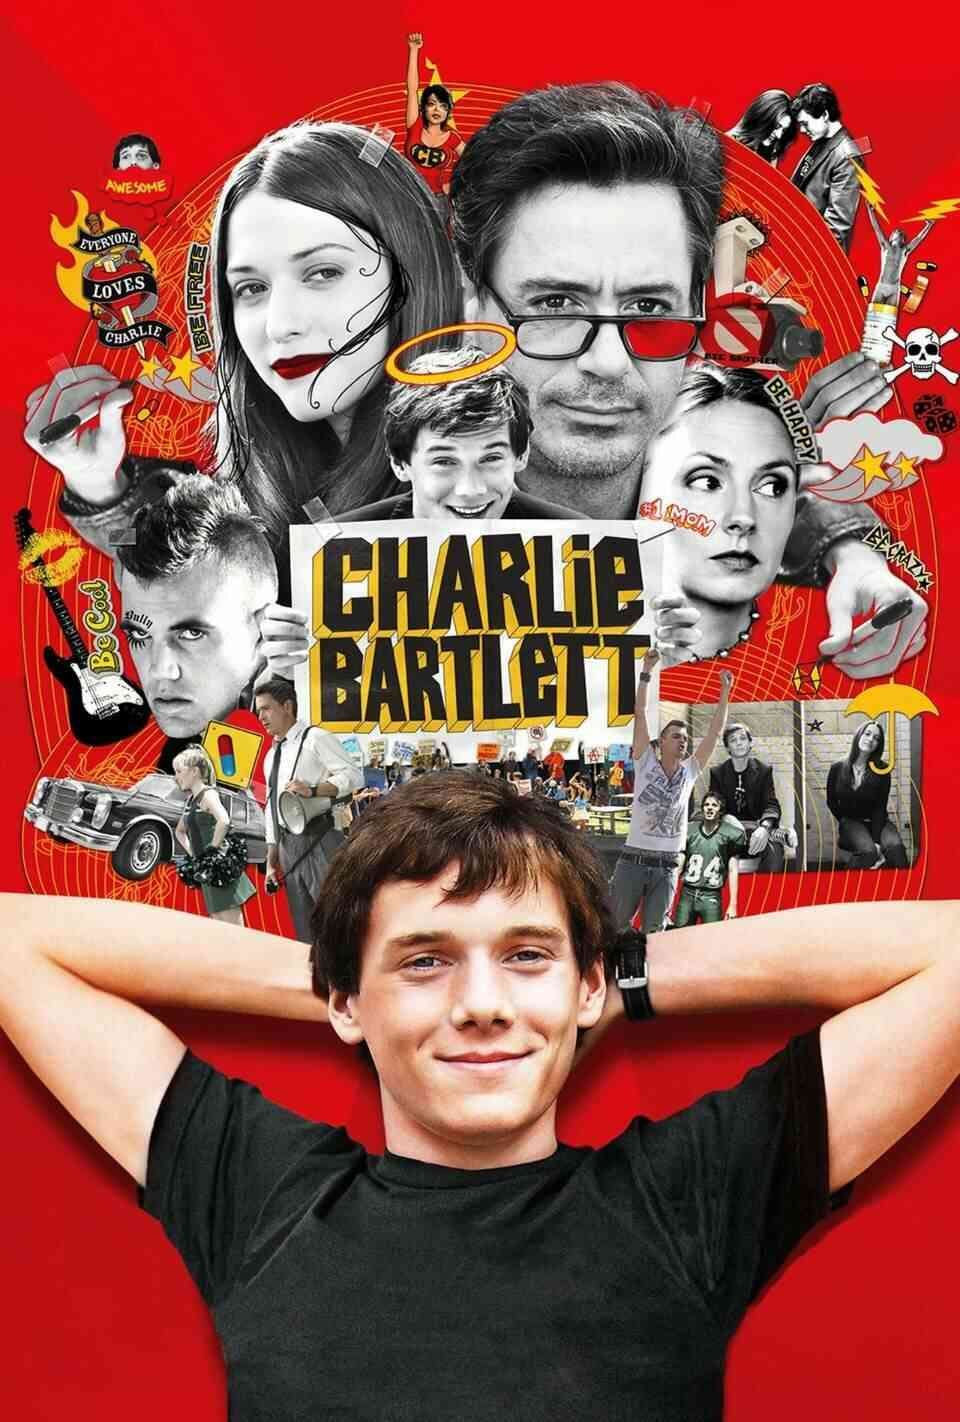 Read Charlie Bartlett screenplay (poster)